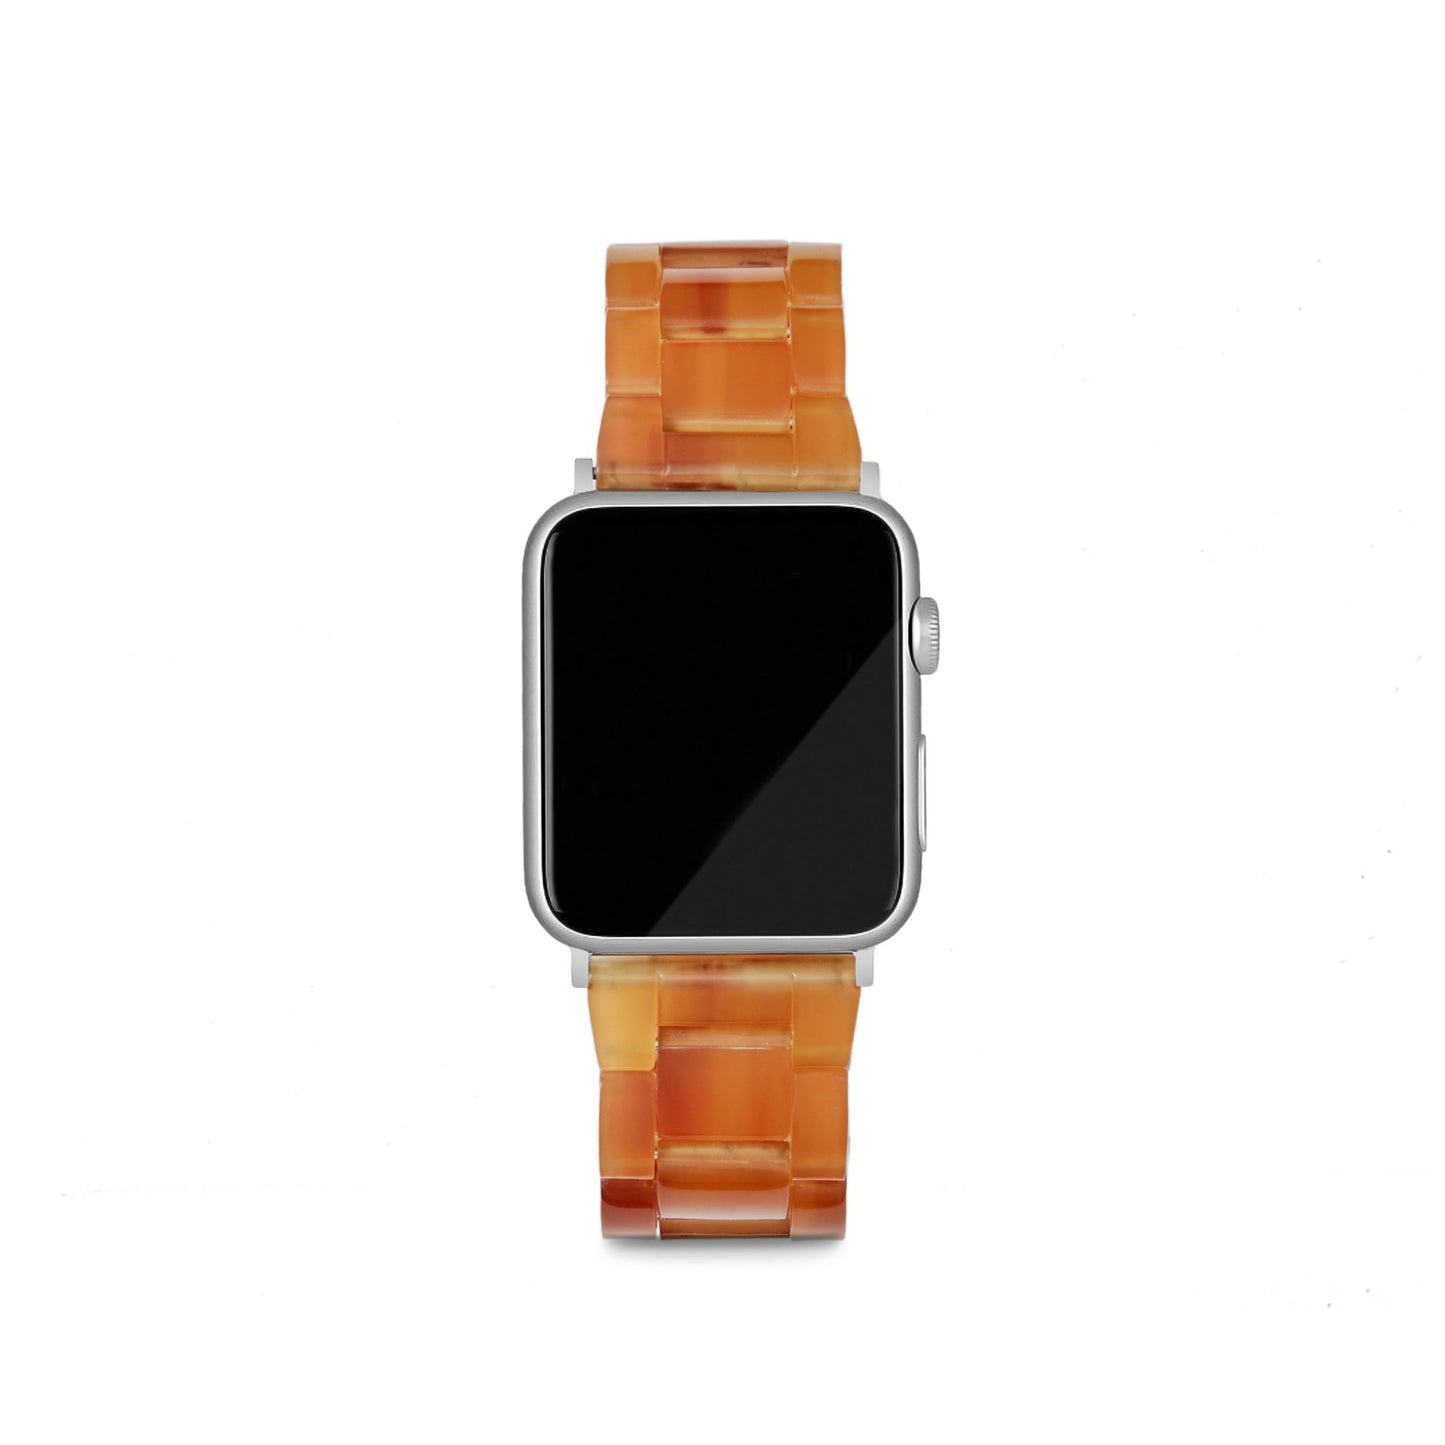 MACHETE Apple Watch Band in Cognac (Old Edition)